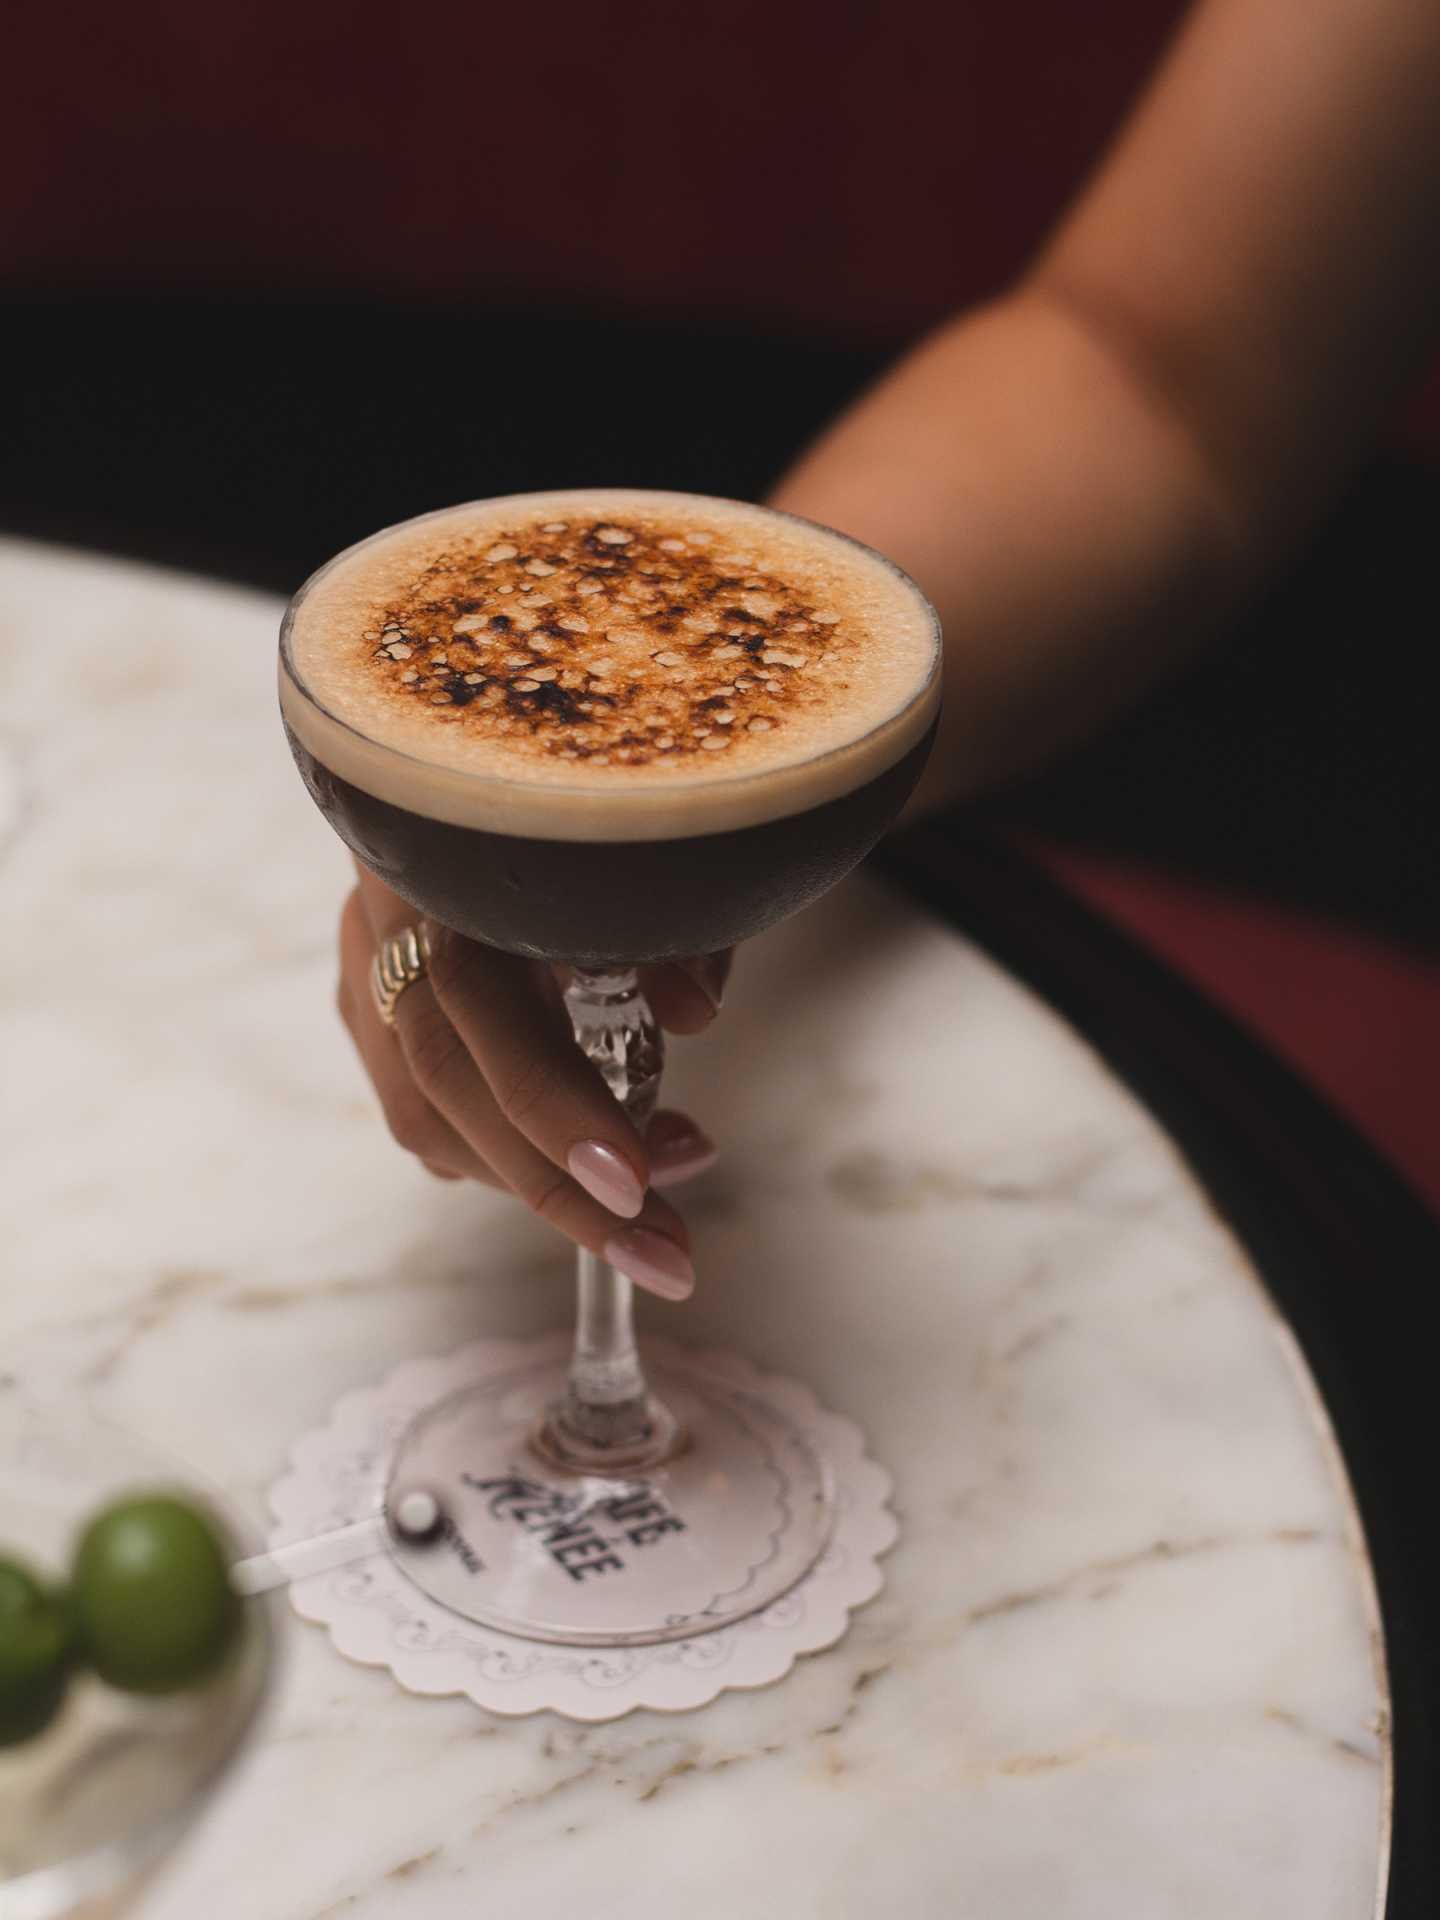 Best new Toronto restaurants | An espresso martini at Cafe Renee in Toronto